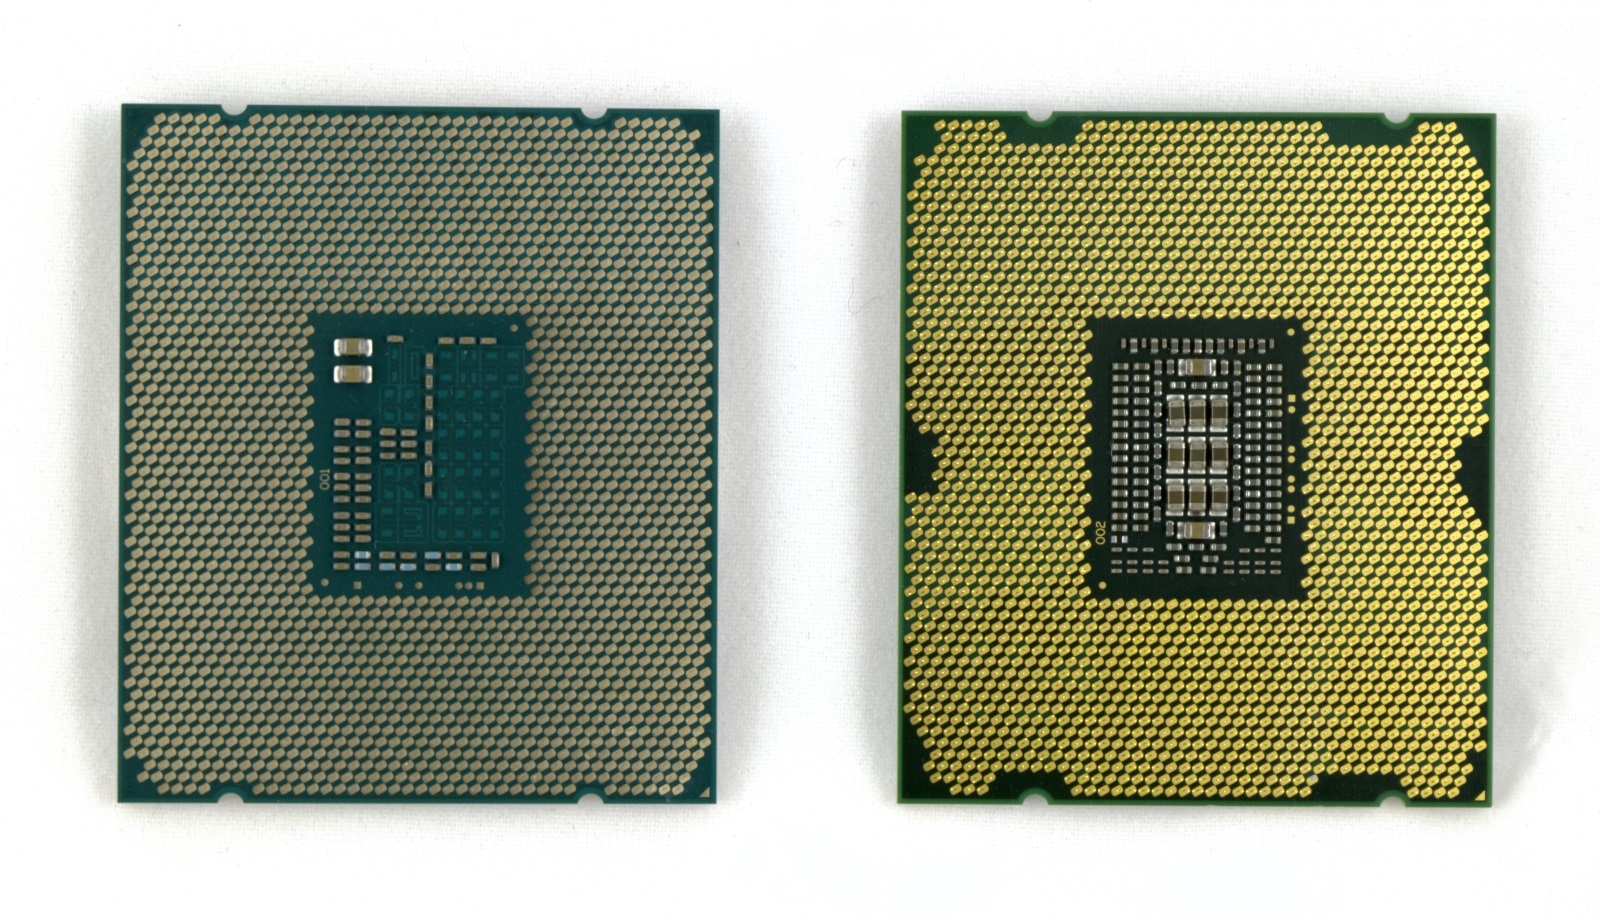 Процессоры xeon lga 2011. Xeon 2011 v3. 2011 V3 процессоры. Intel Core i7-5960x extreme Edition Haswell-e lga2011-3, 8 x 3000 МГЦ. Intel Core i7-5930k Haswell-e lga2011-3, 6 x 3500 МГЦ.